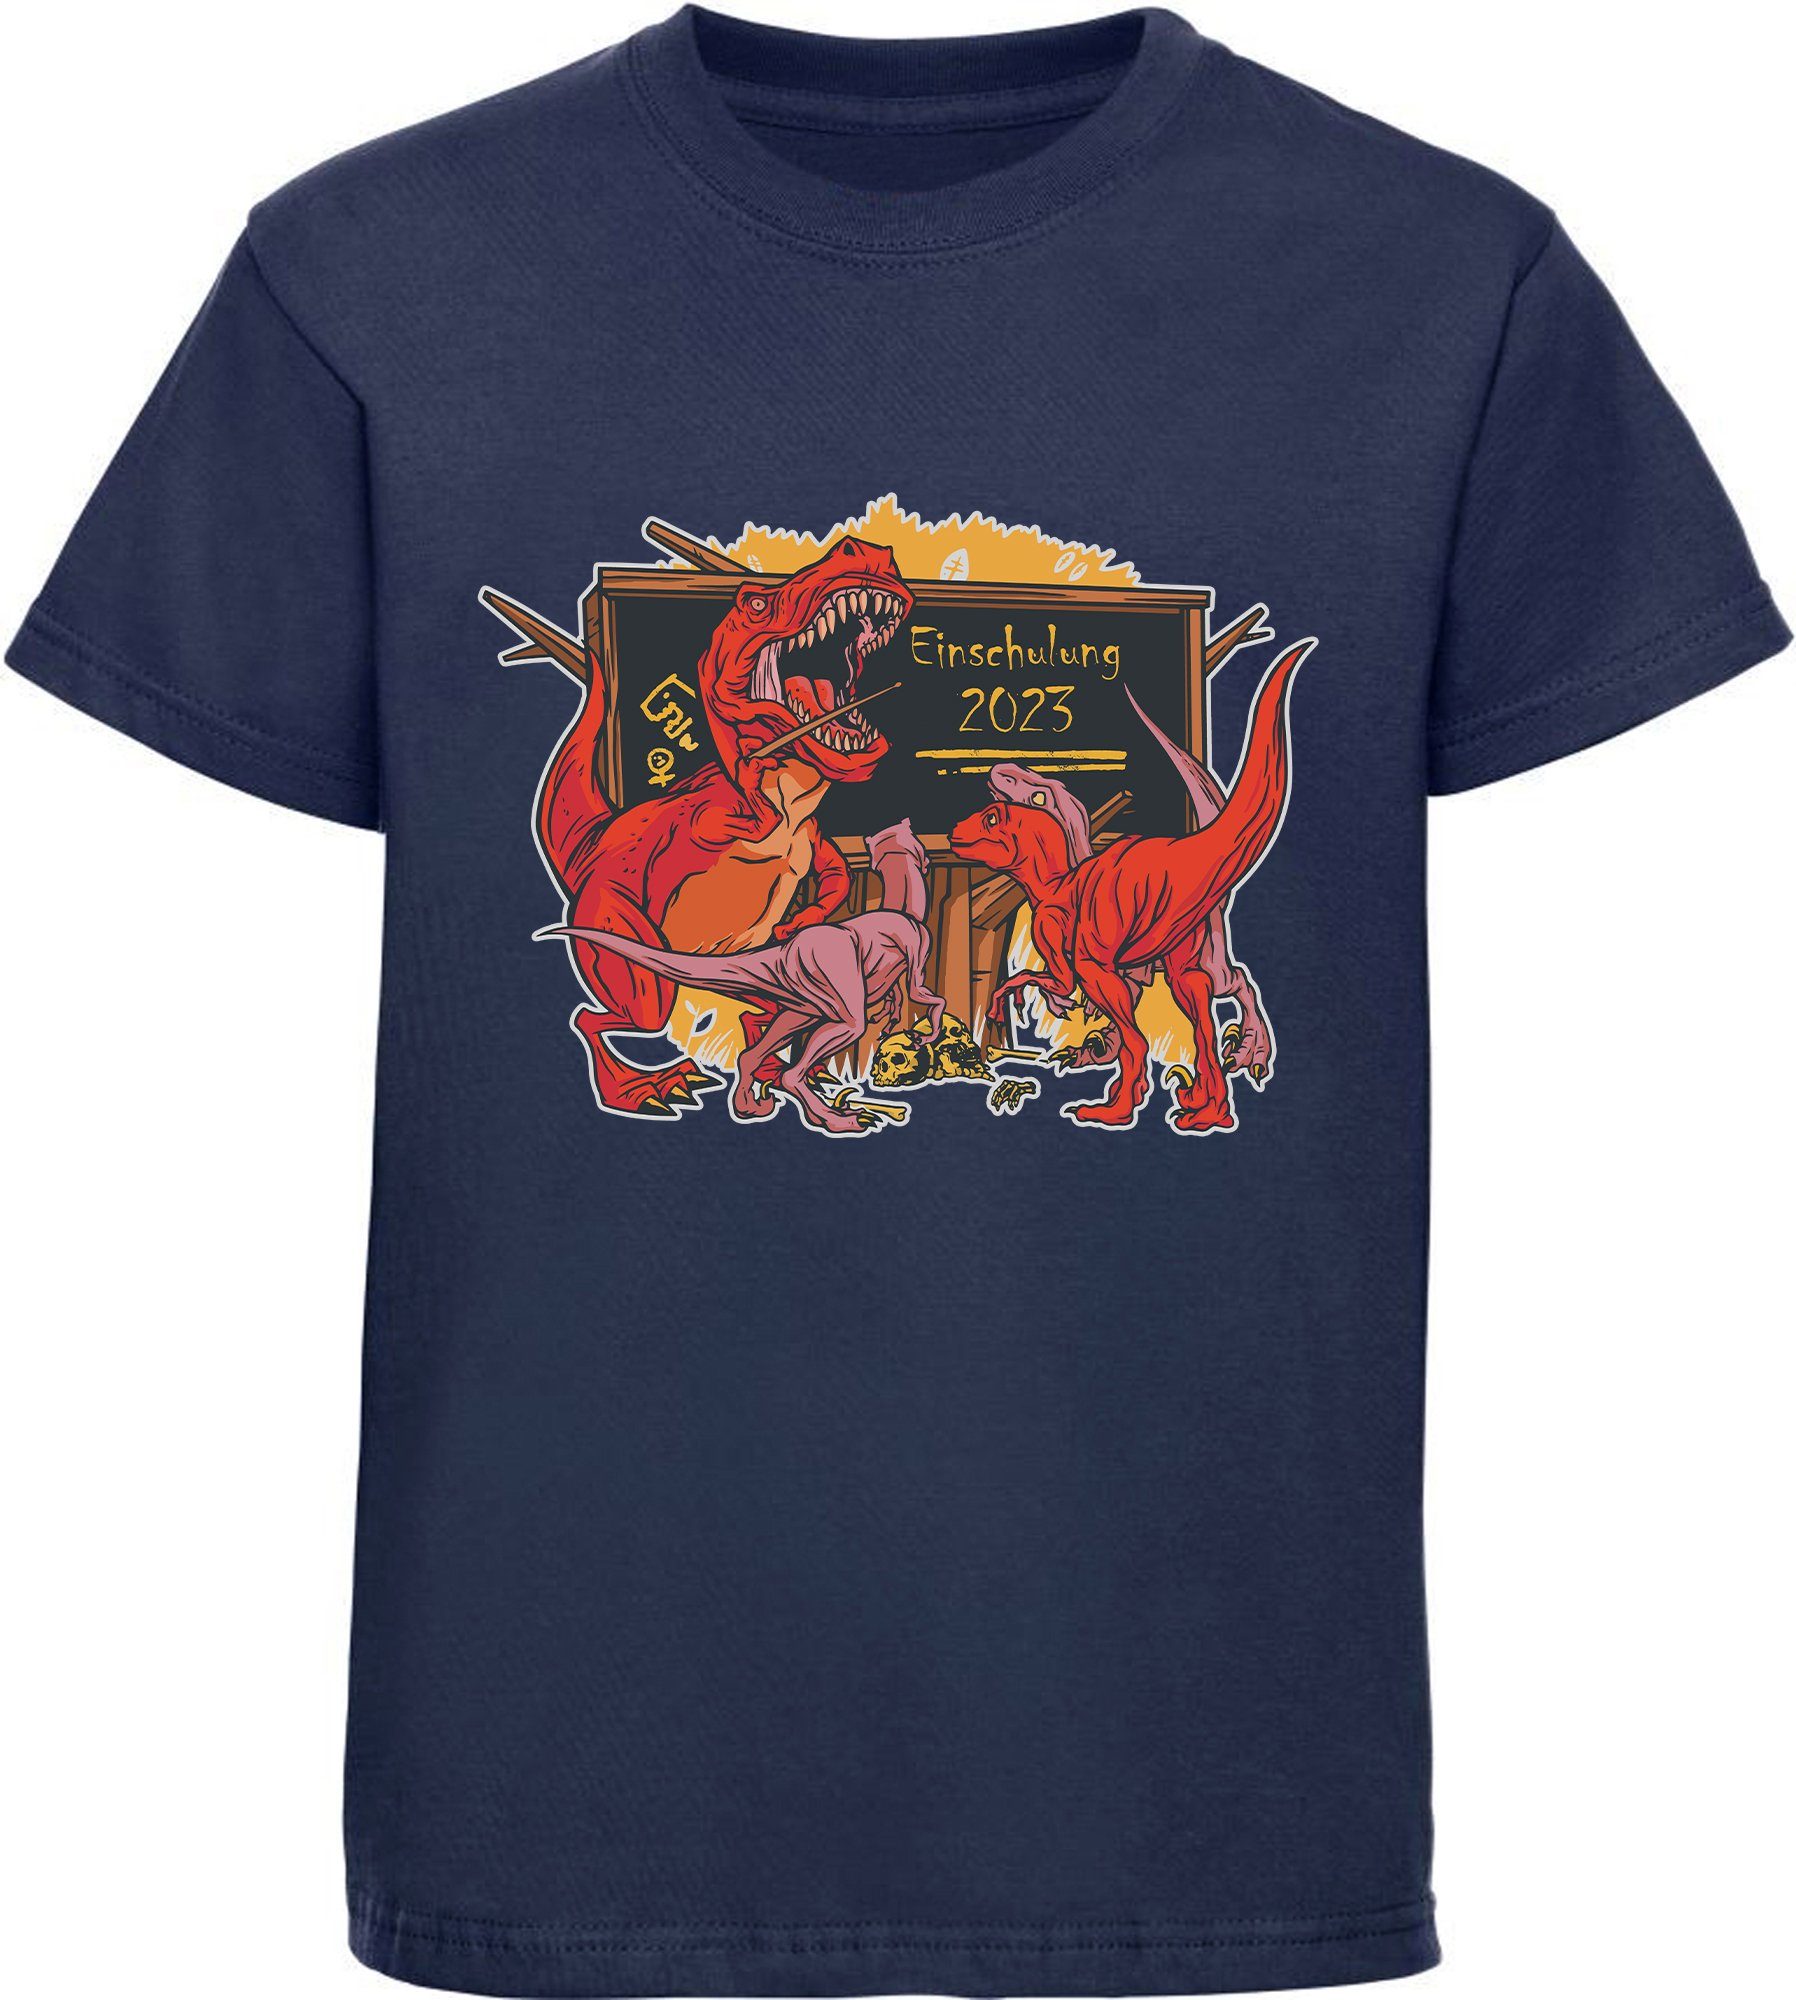 MyDesign24 Print-Shirt bedrucktes Kinder T-Shirt weiß, brüllender Lehrer T-Rex als schwarz, 2023, Baumwollshirt blau blau, navy Einschulung rot, i38